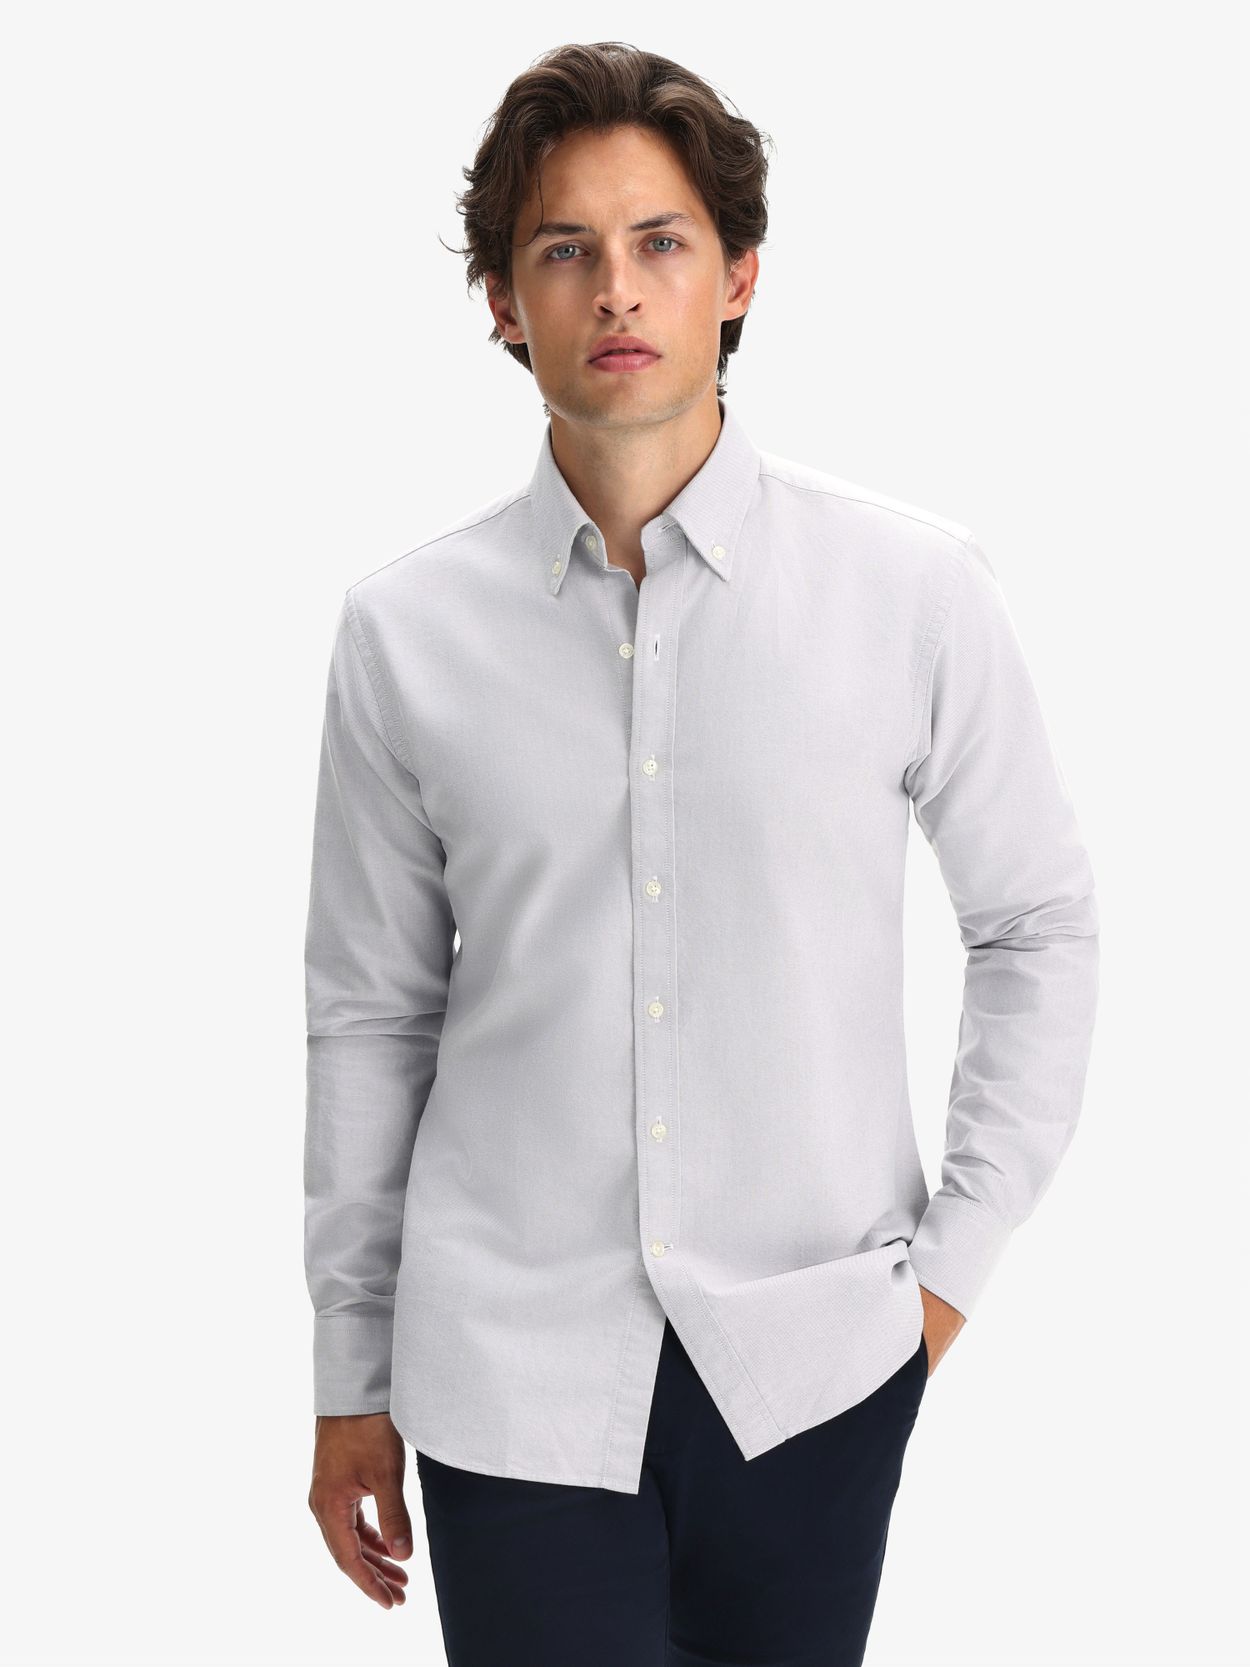 Mid Grey Oxford Shirt